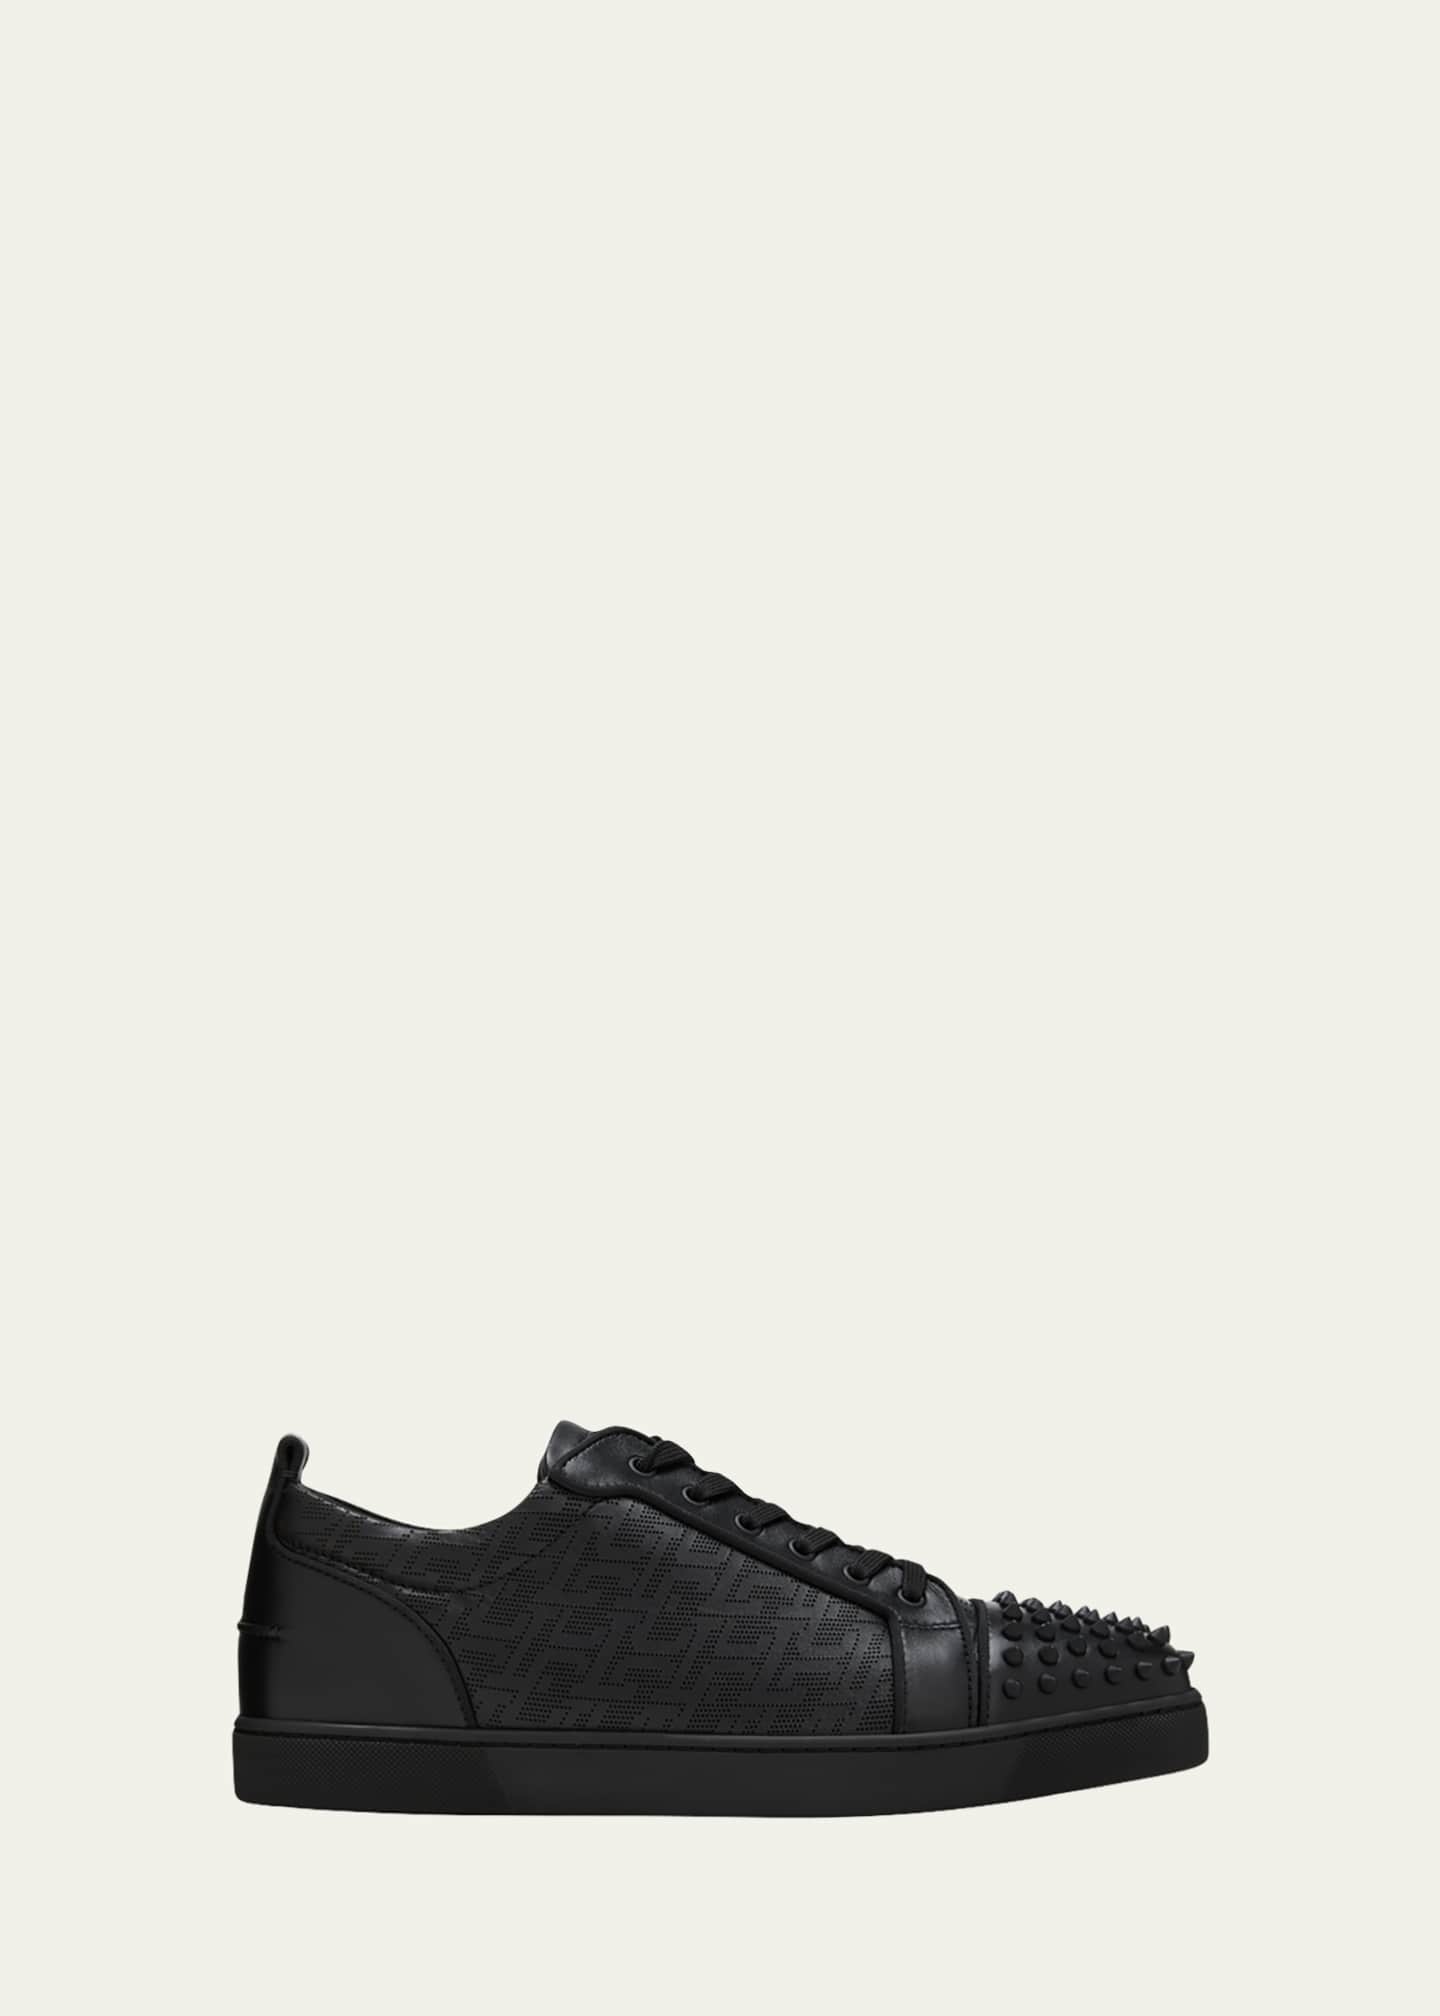 Christian Louboutin Louis Junior Spikes Black - Mens Shoes - Size 45